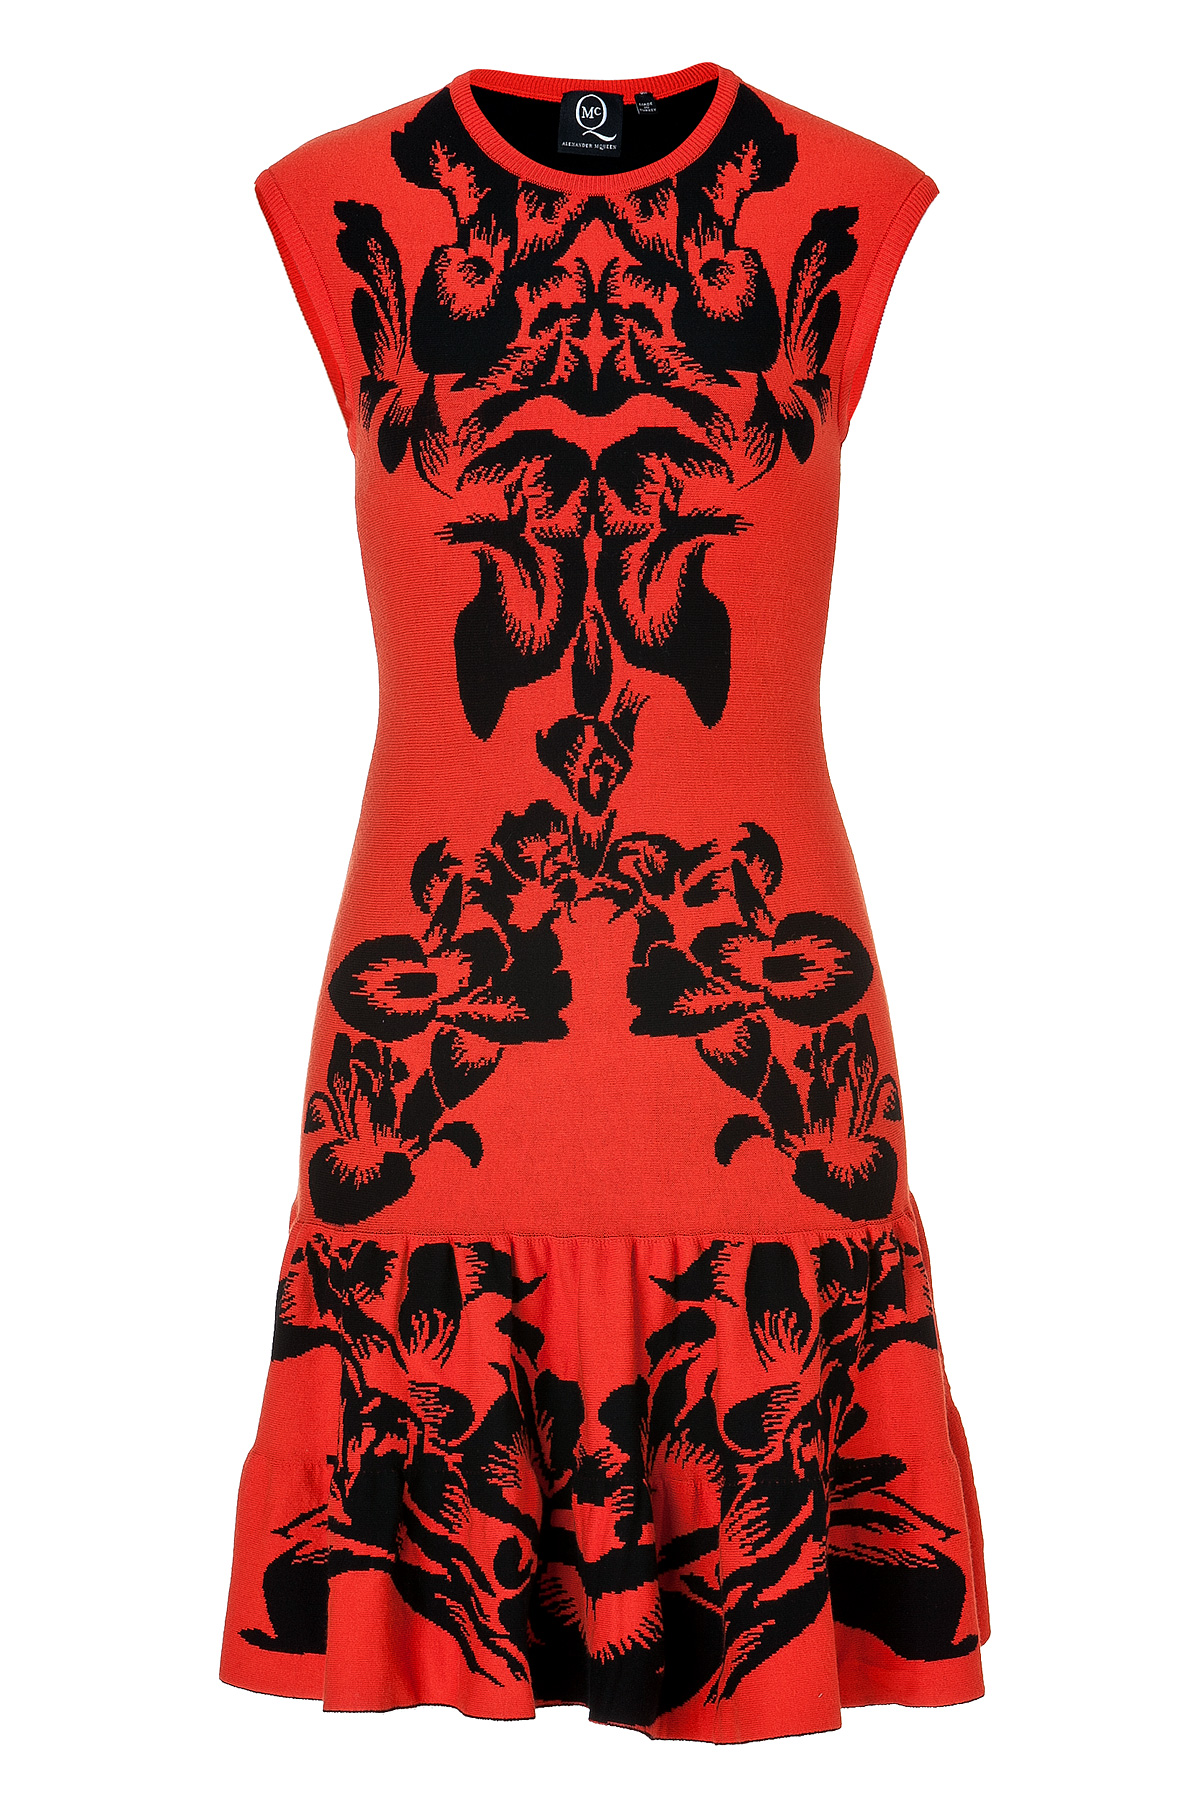 Mcq alexander mcqueen Intarsia Knit Dress in Red (black) | Lyst